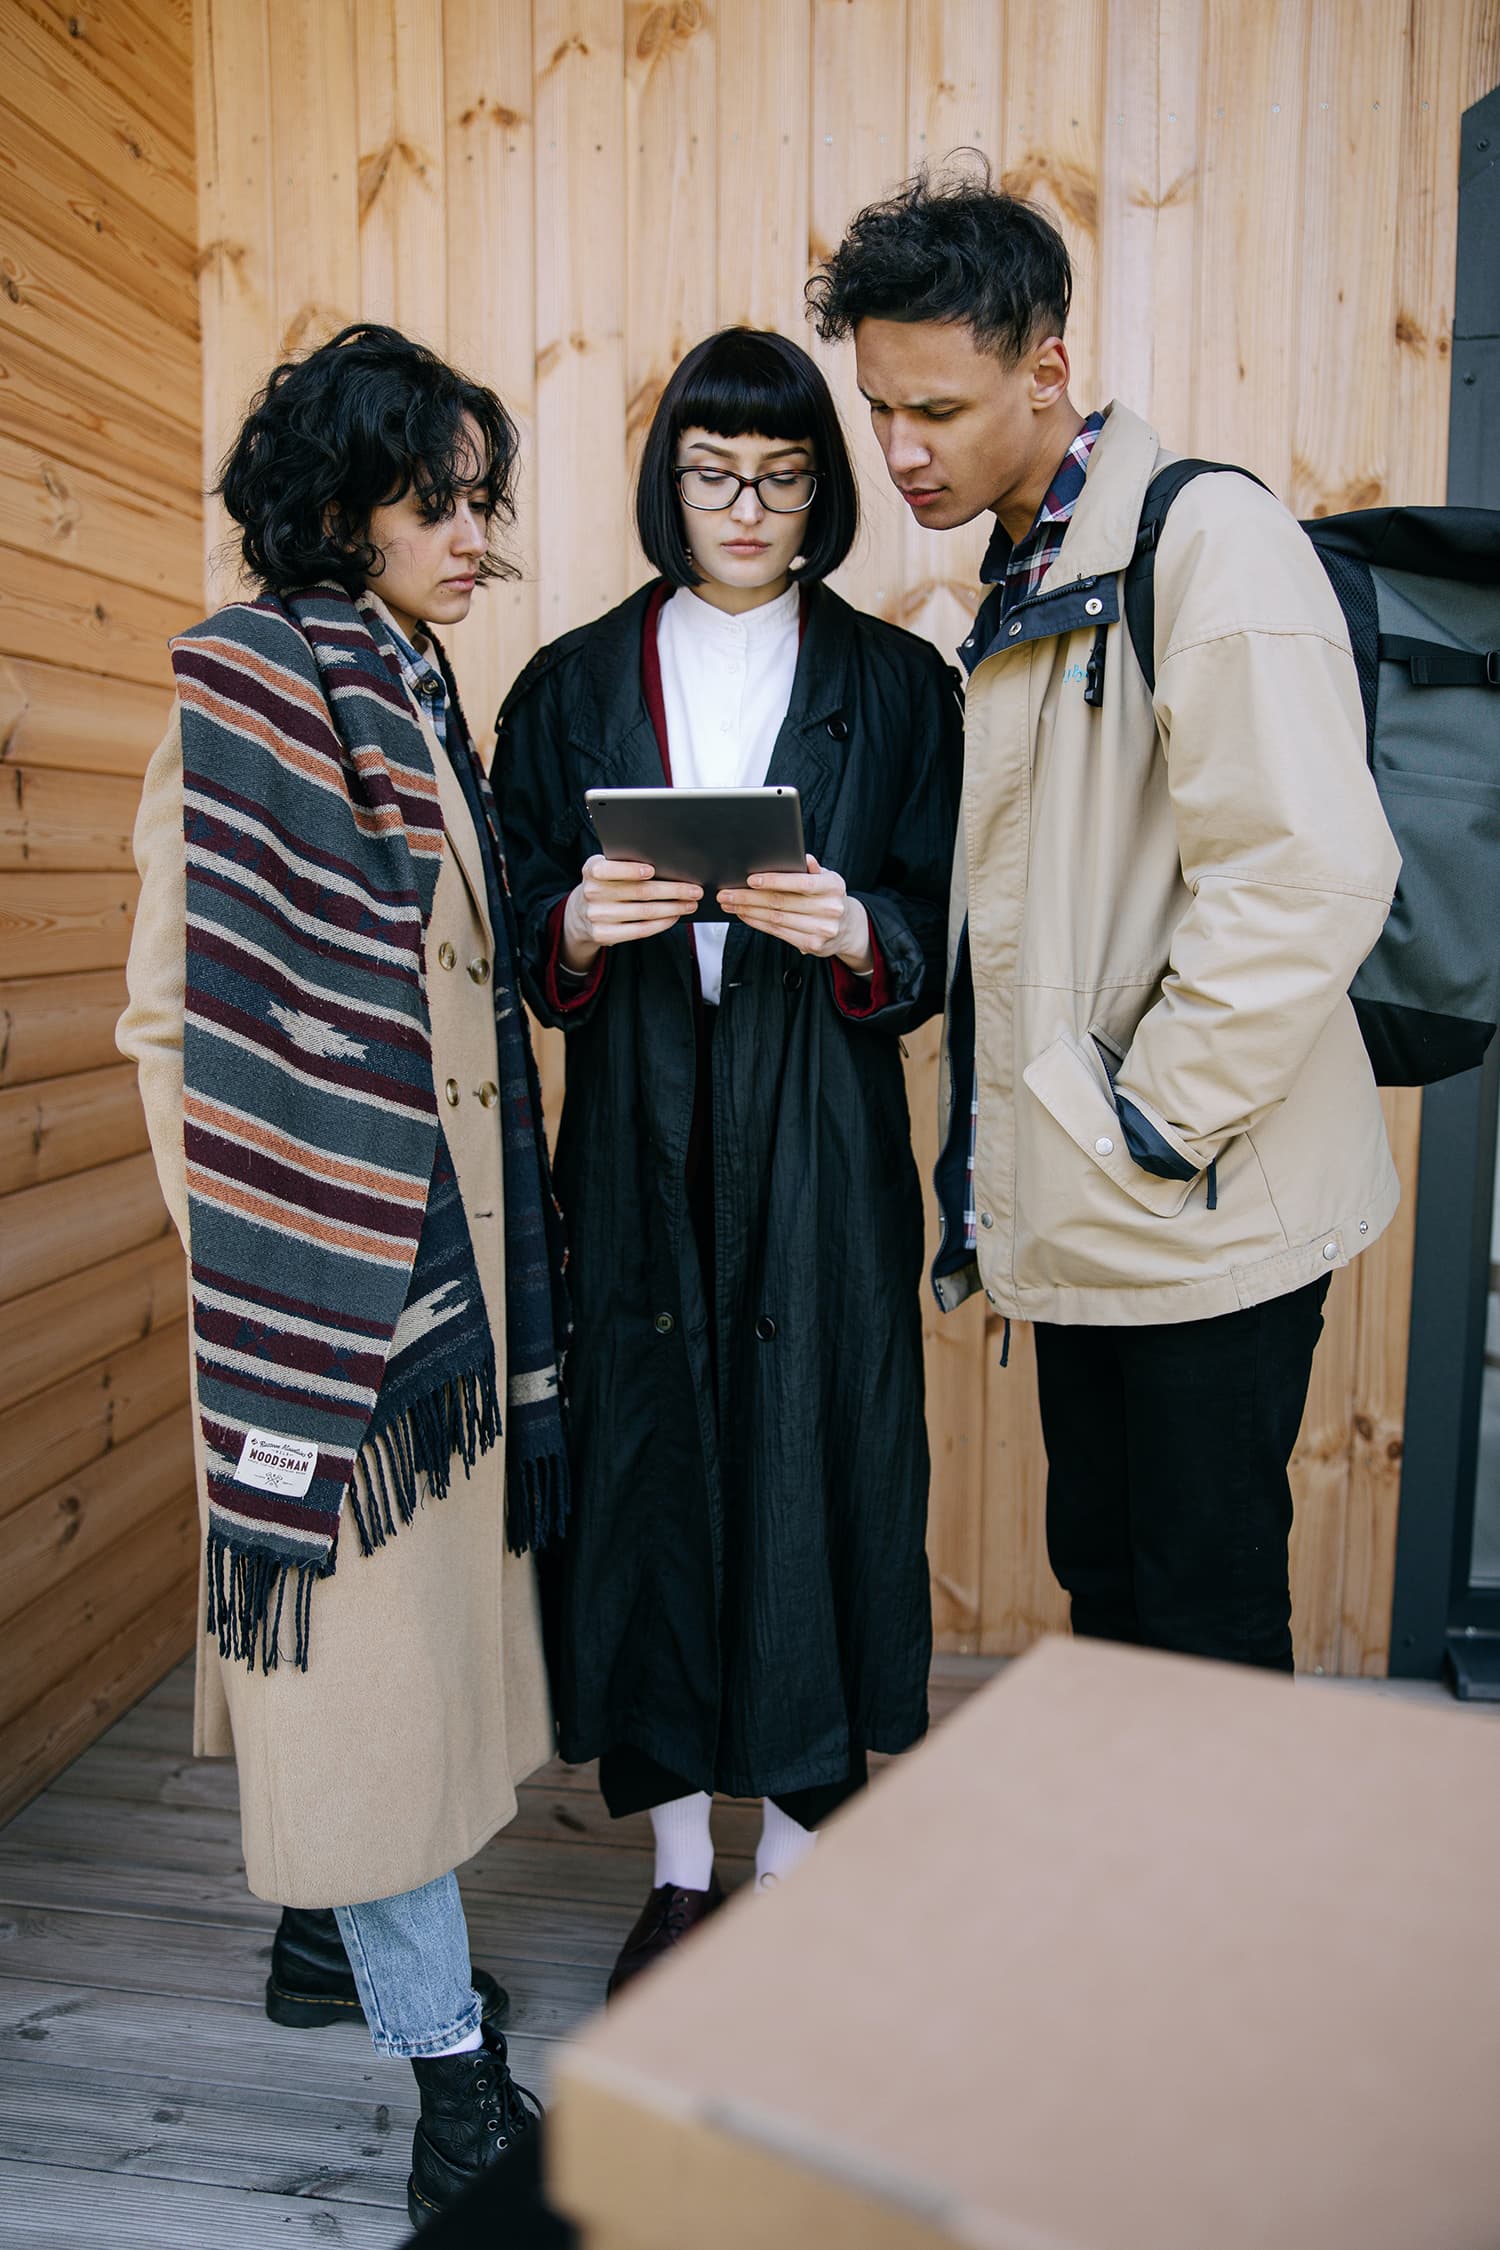 Woman in Black Coat Holding Tablet Beside Man in Brown Jacket and Woman in Brown Coat